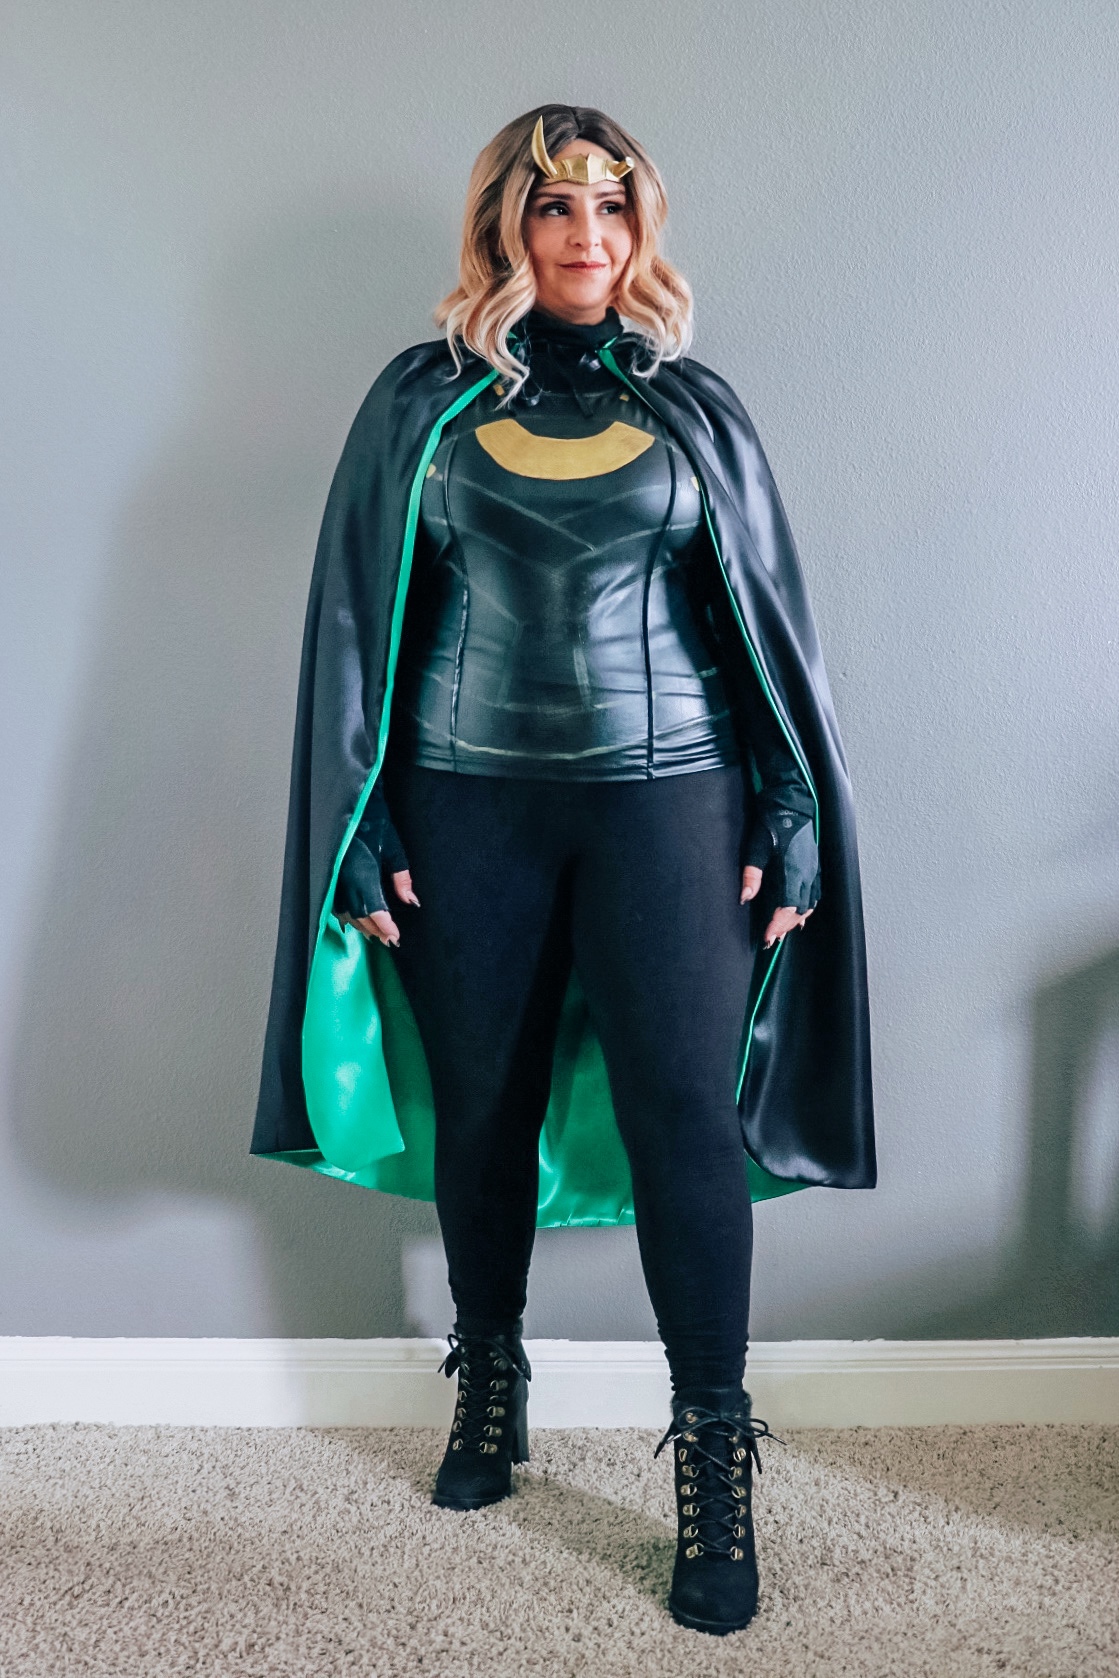 Sylvie costume (Loki variant outfit)